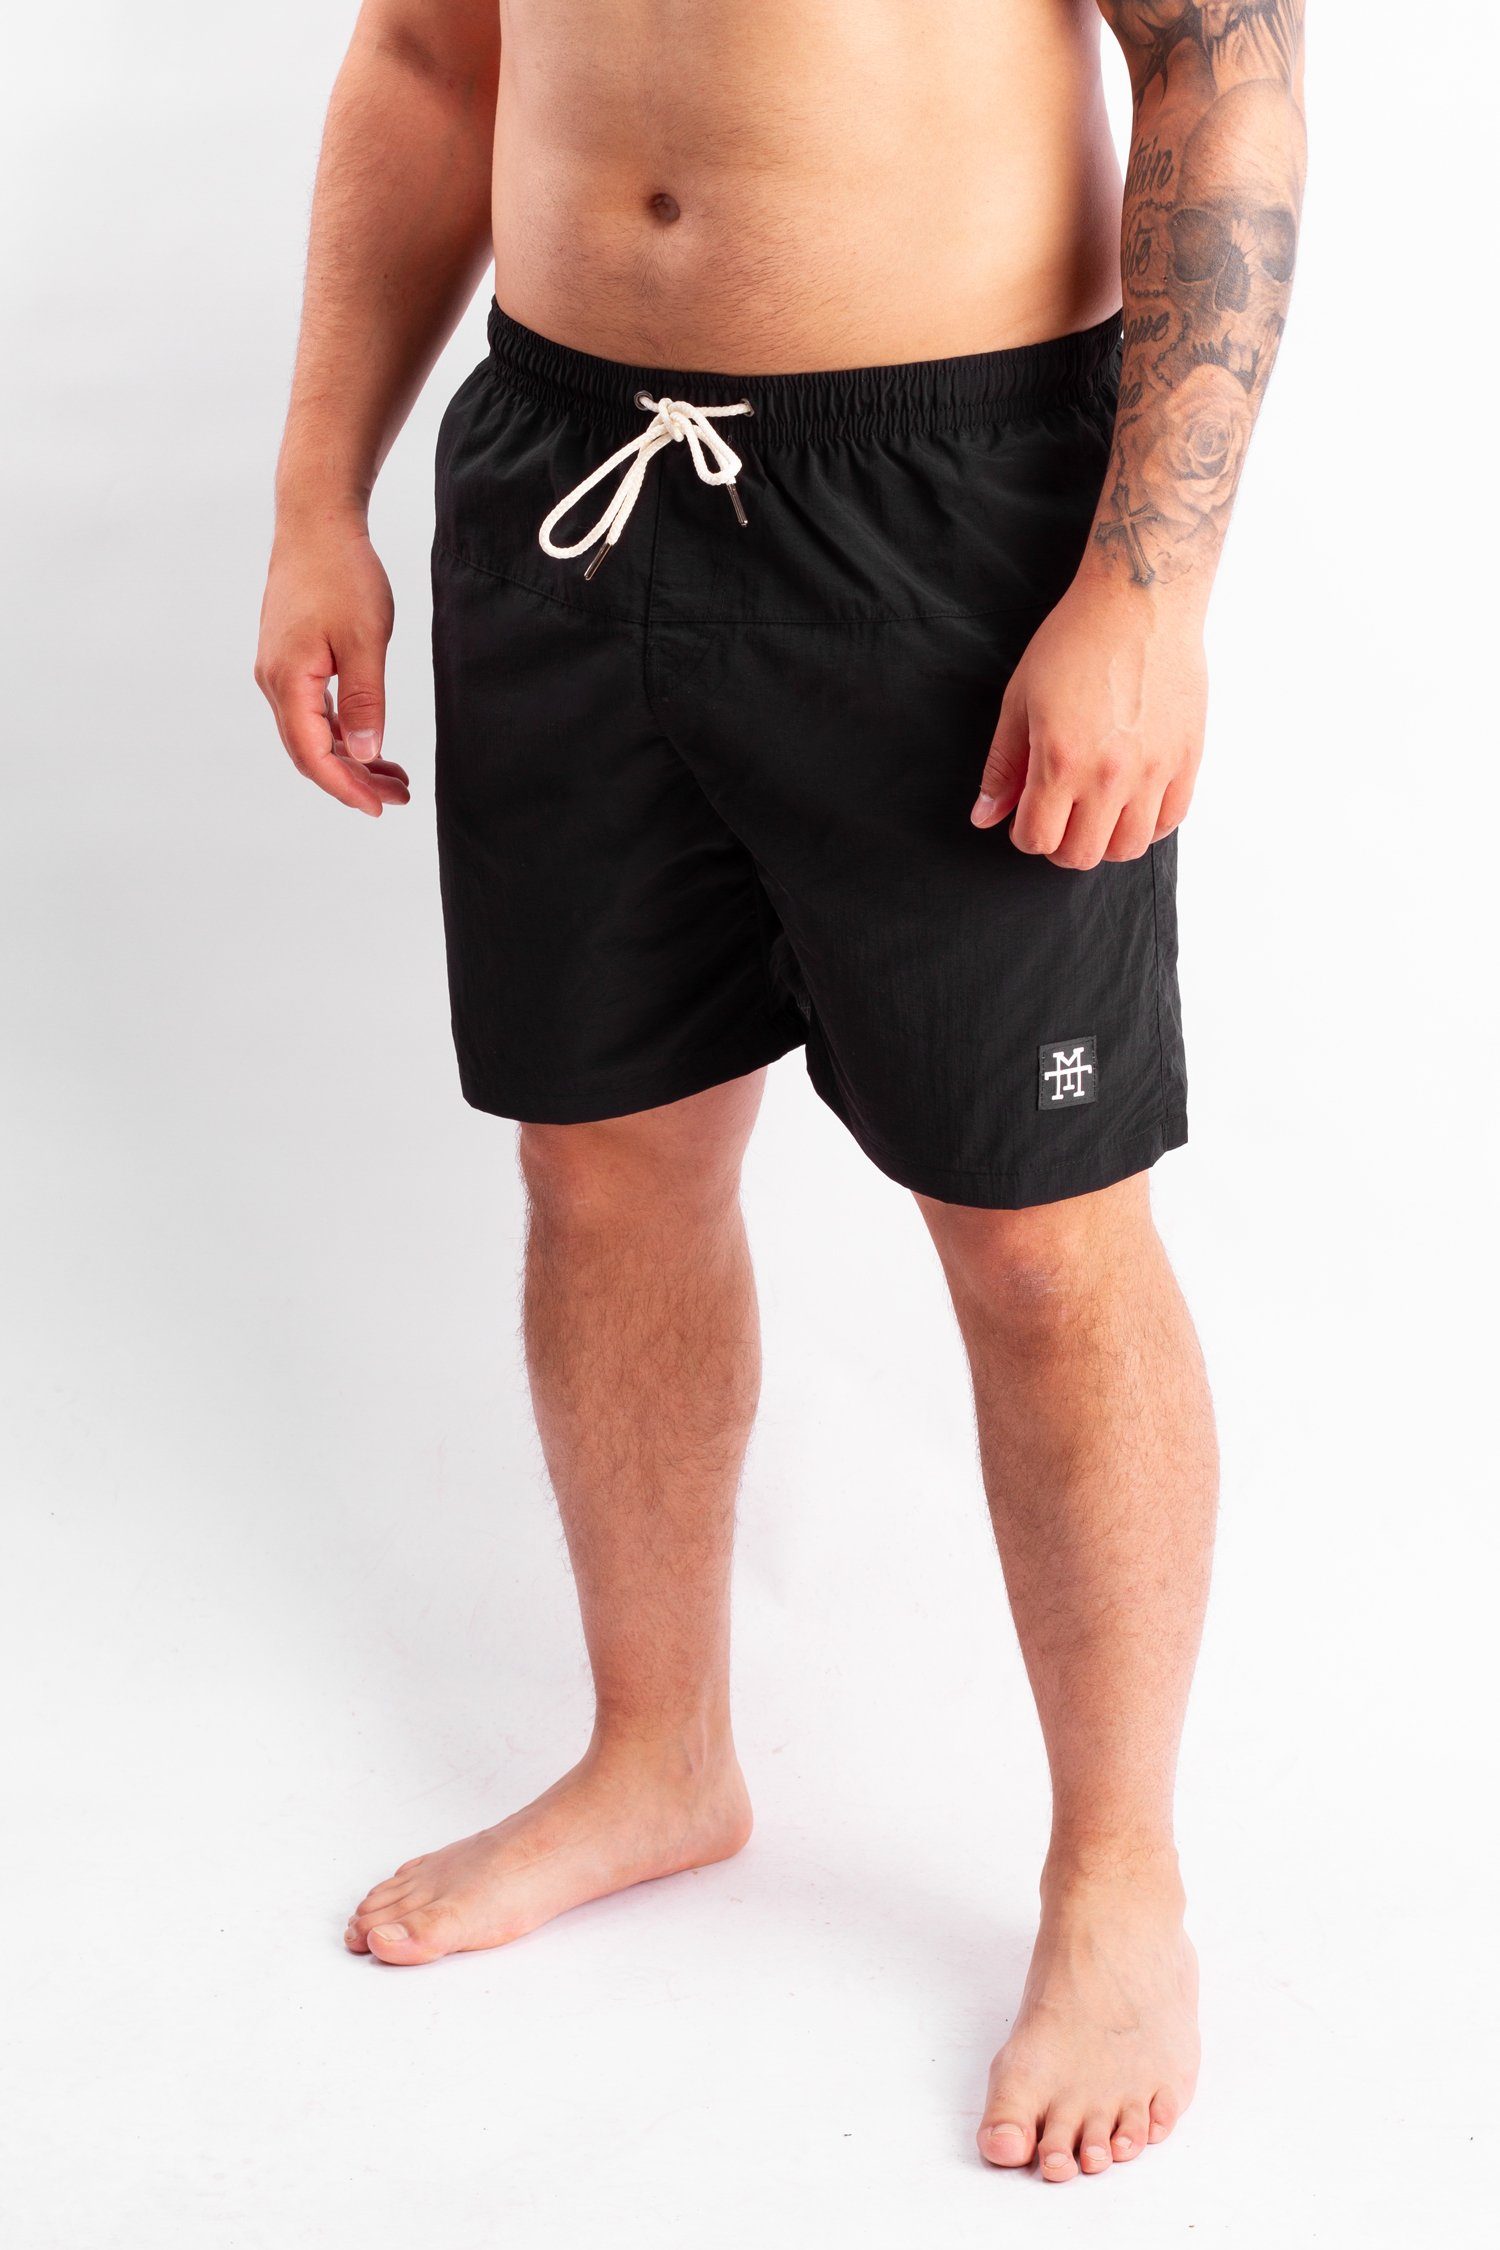 Manufaktur13 Badeshorts Shorts Swim - Black schnelltrocknend Out Badehosen